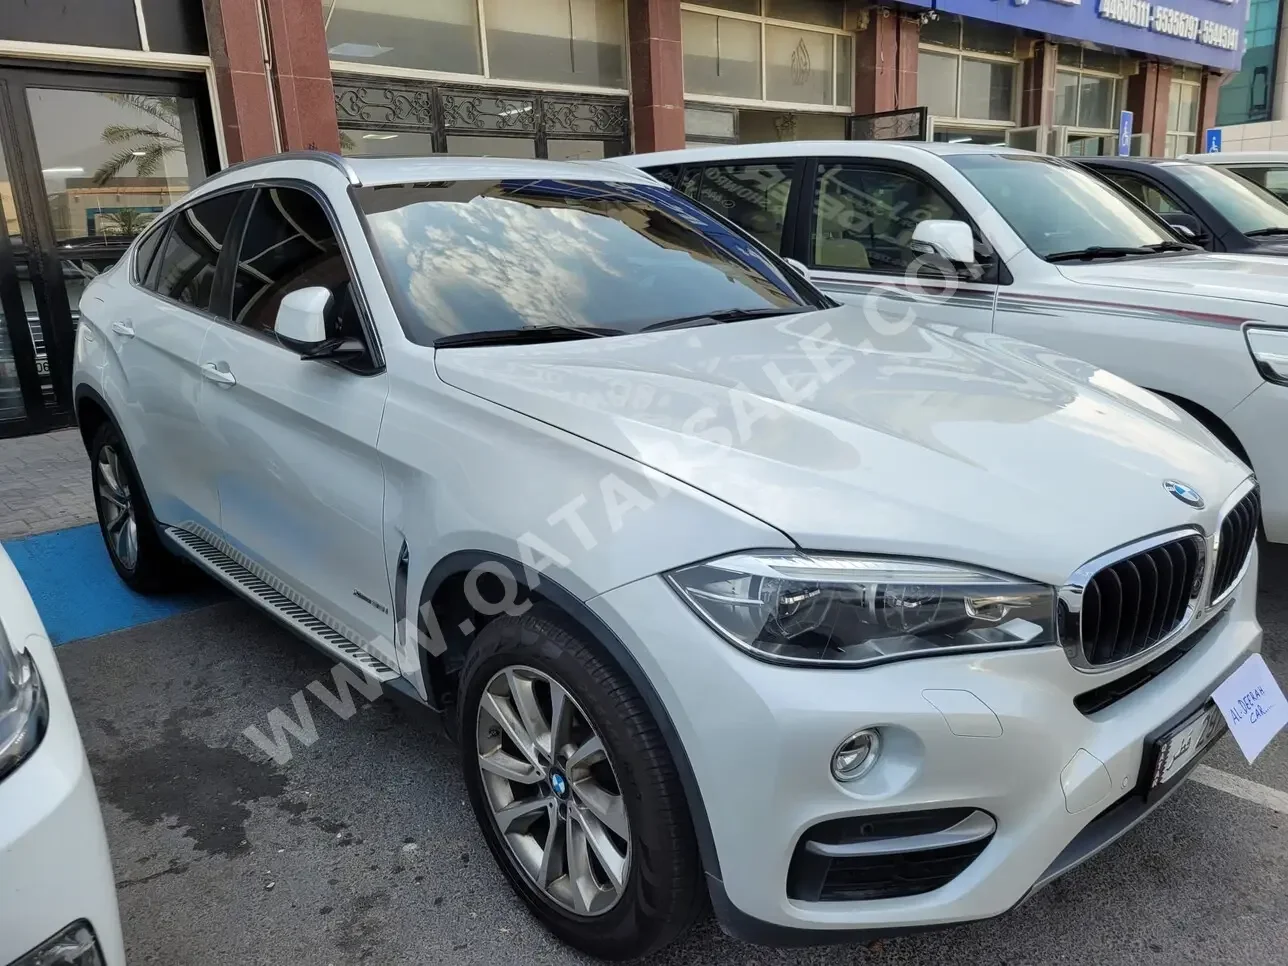 BMW  X-Series  X6  2017  Automatic  132,000 Km  6 Cylinder  Four Wheel Drive (4WD)  SUV  White